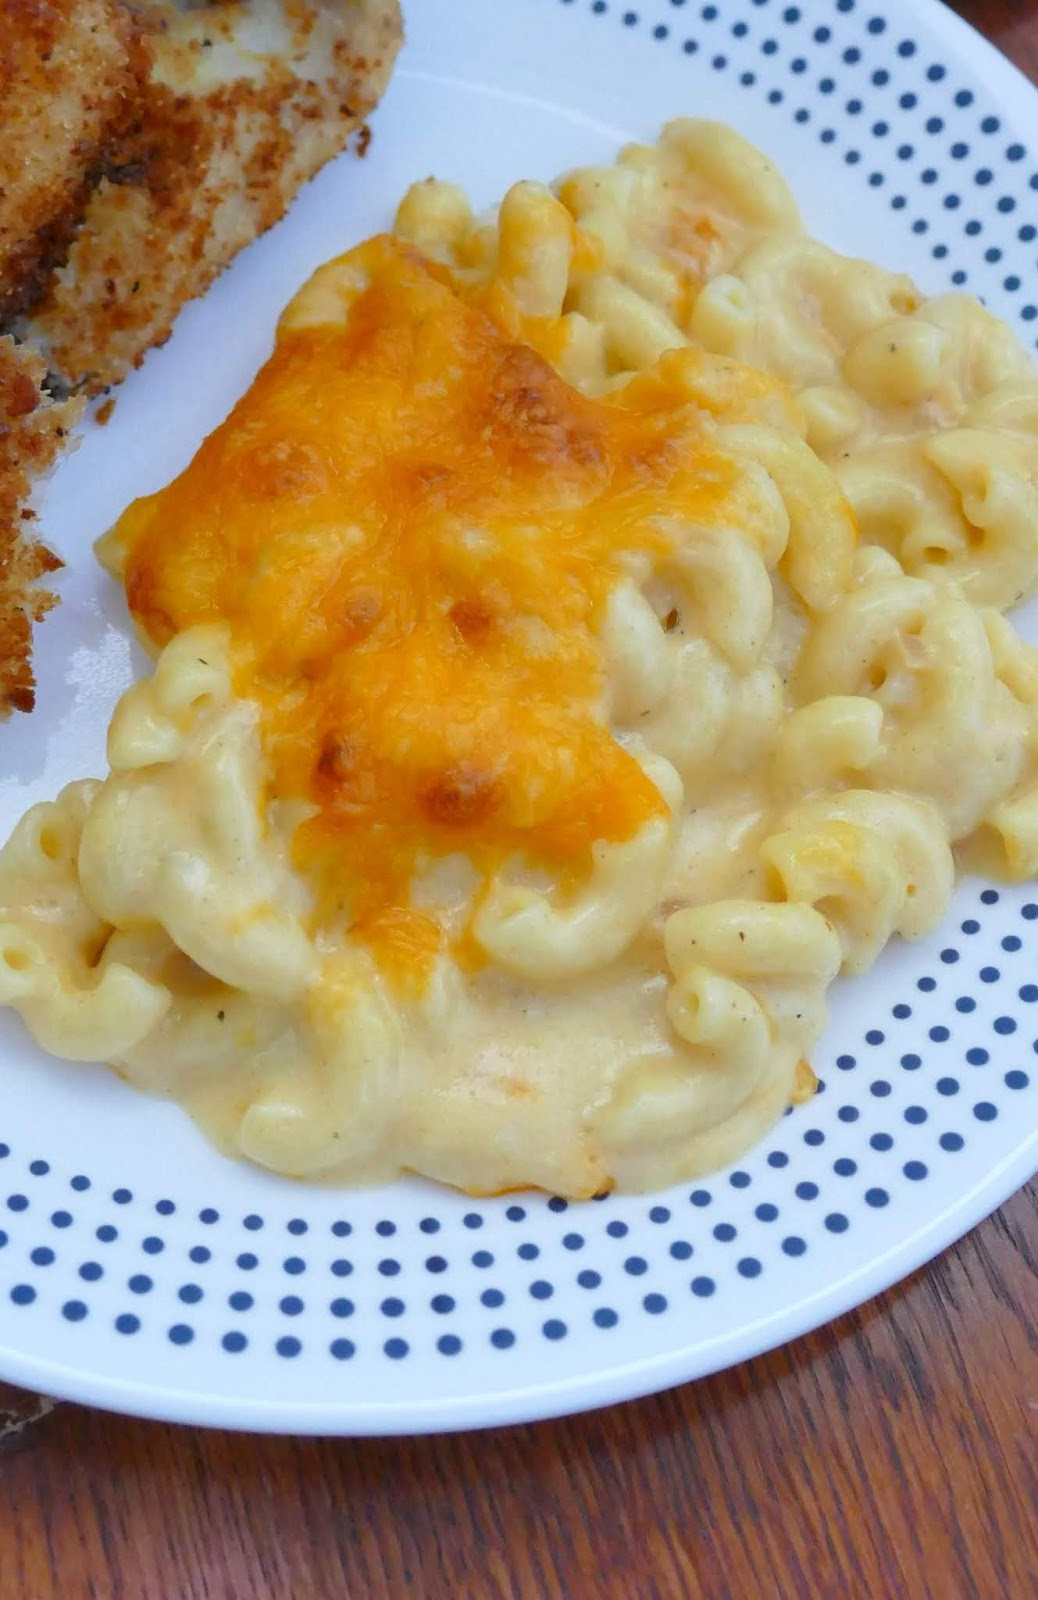 Kraft Baked Macaroni And Cheese Recipe
 Hot Eats and Cool Reads Creamy Baked Macaroni and Cheese